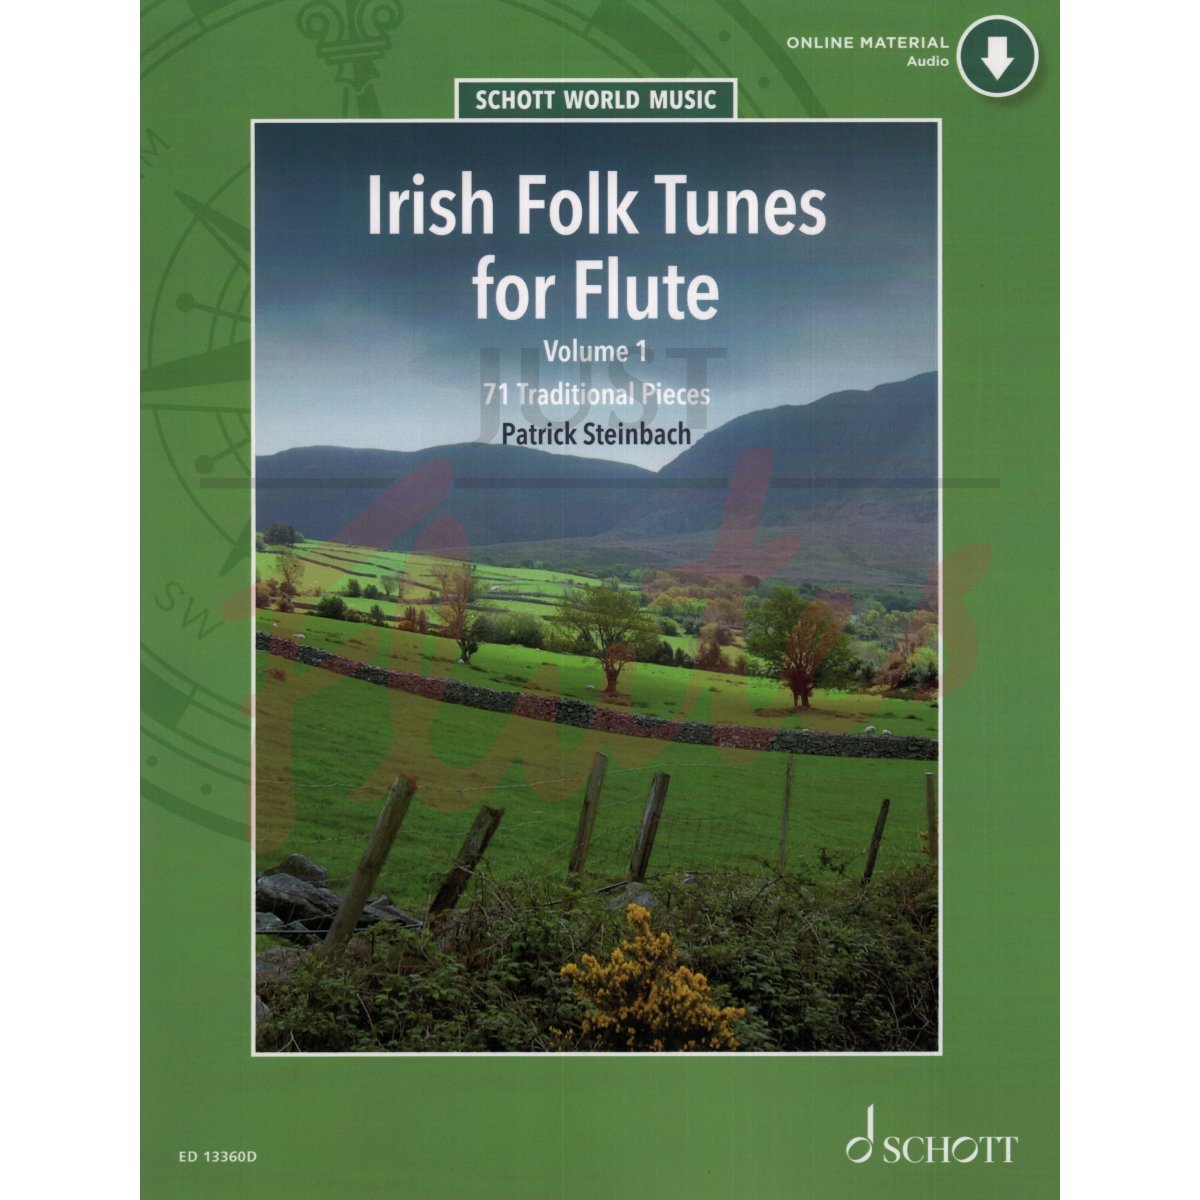 Irish Folk Tunes for Flute, Volume One